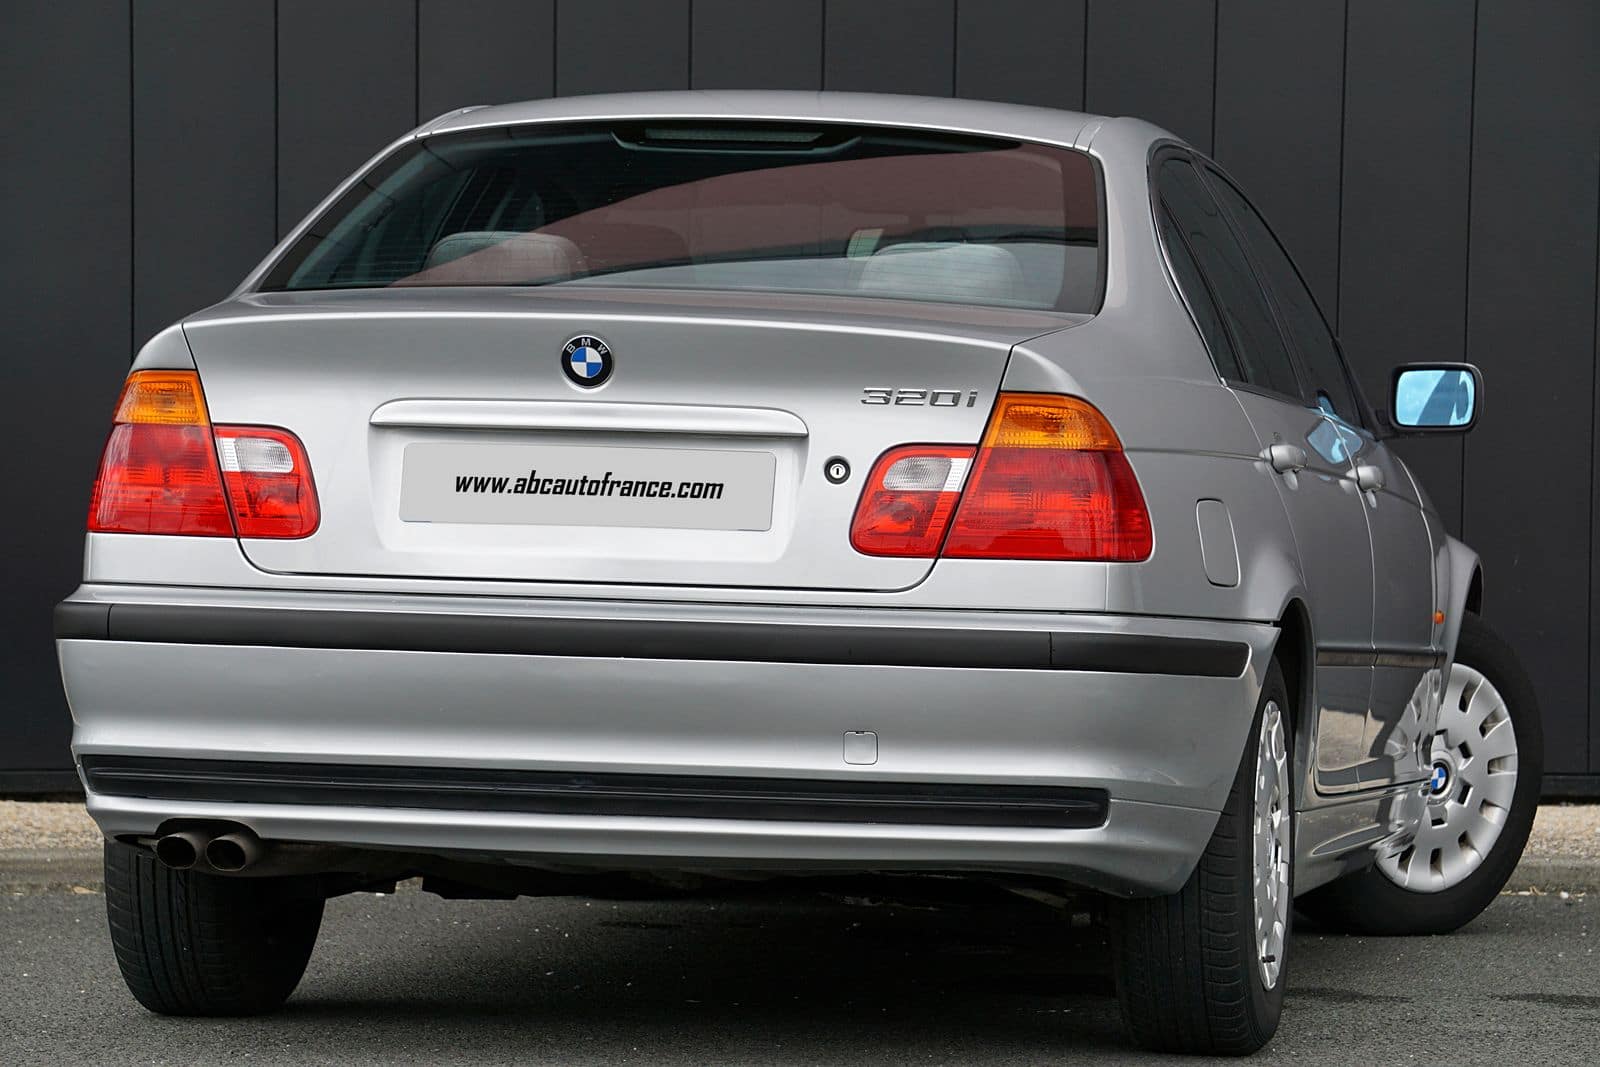 BMW 320i (E46) 2.0 150 Cv état collection Occasion 79 abcautofrance (abc auto france) 7